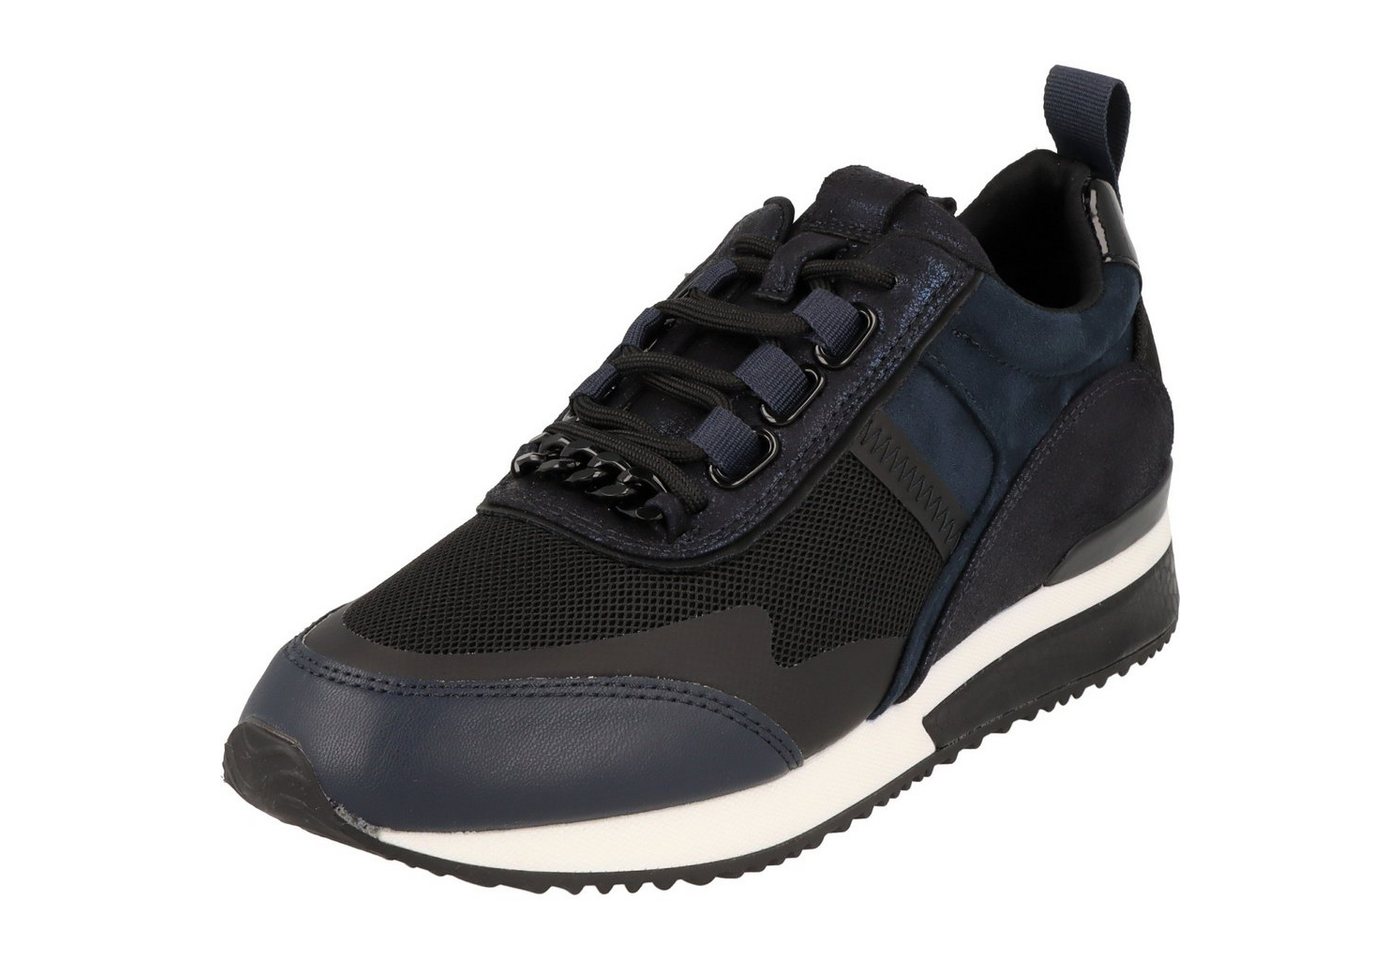 Damen Schuhe Sneaker Halbschuhe 2003156-1060 Dk.Blue/Mesh Keilsneaker von La Strada